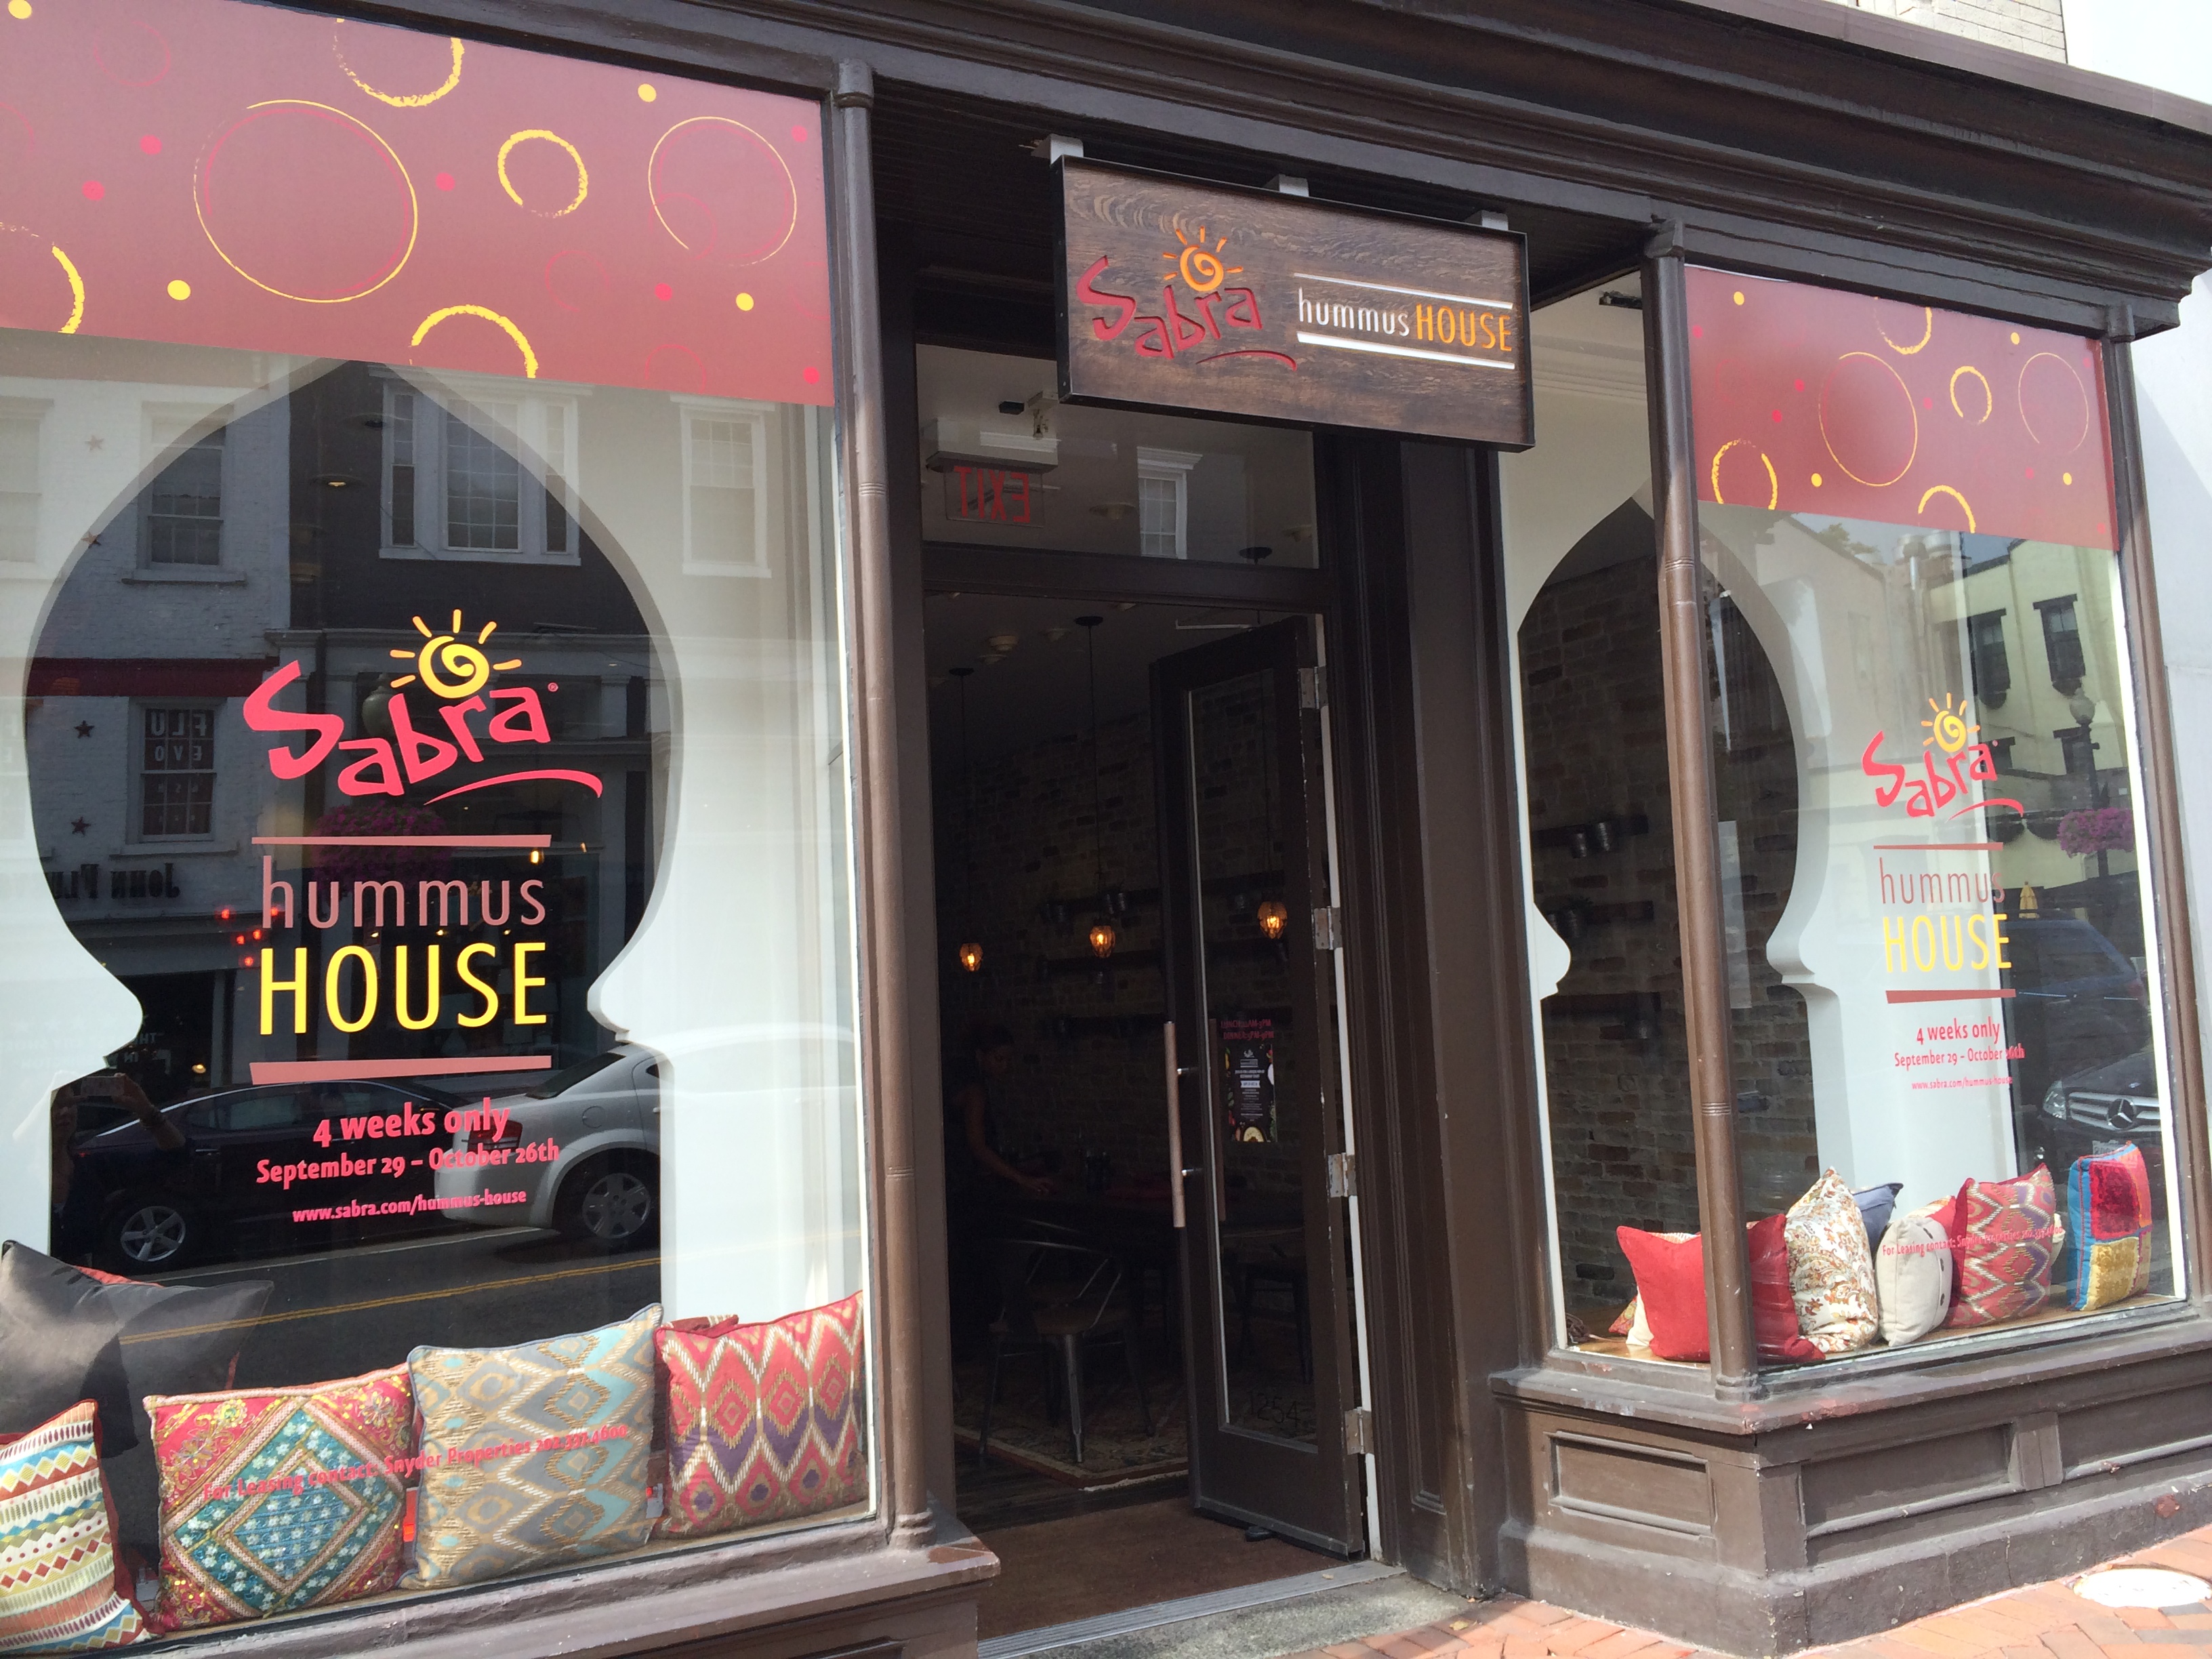 More hummus among us: Sabra opens pop-up restaurant